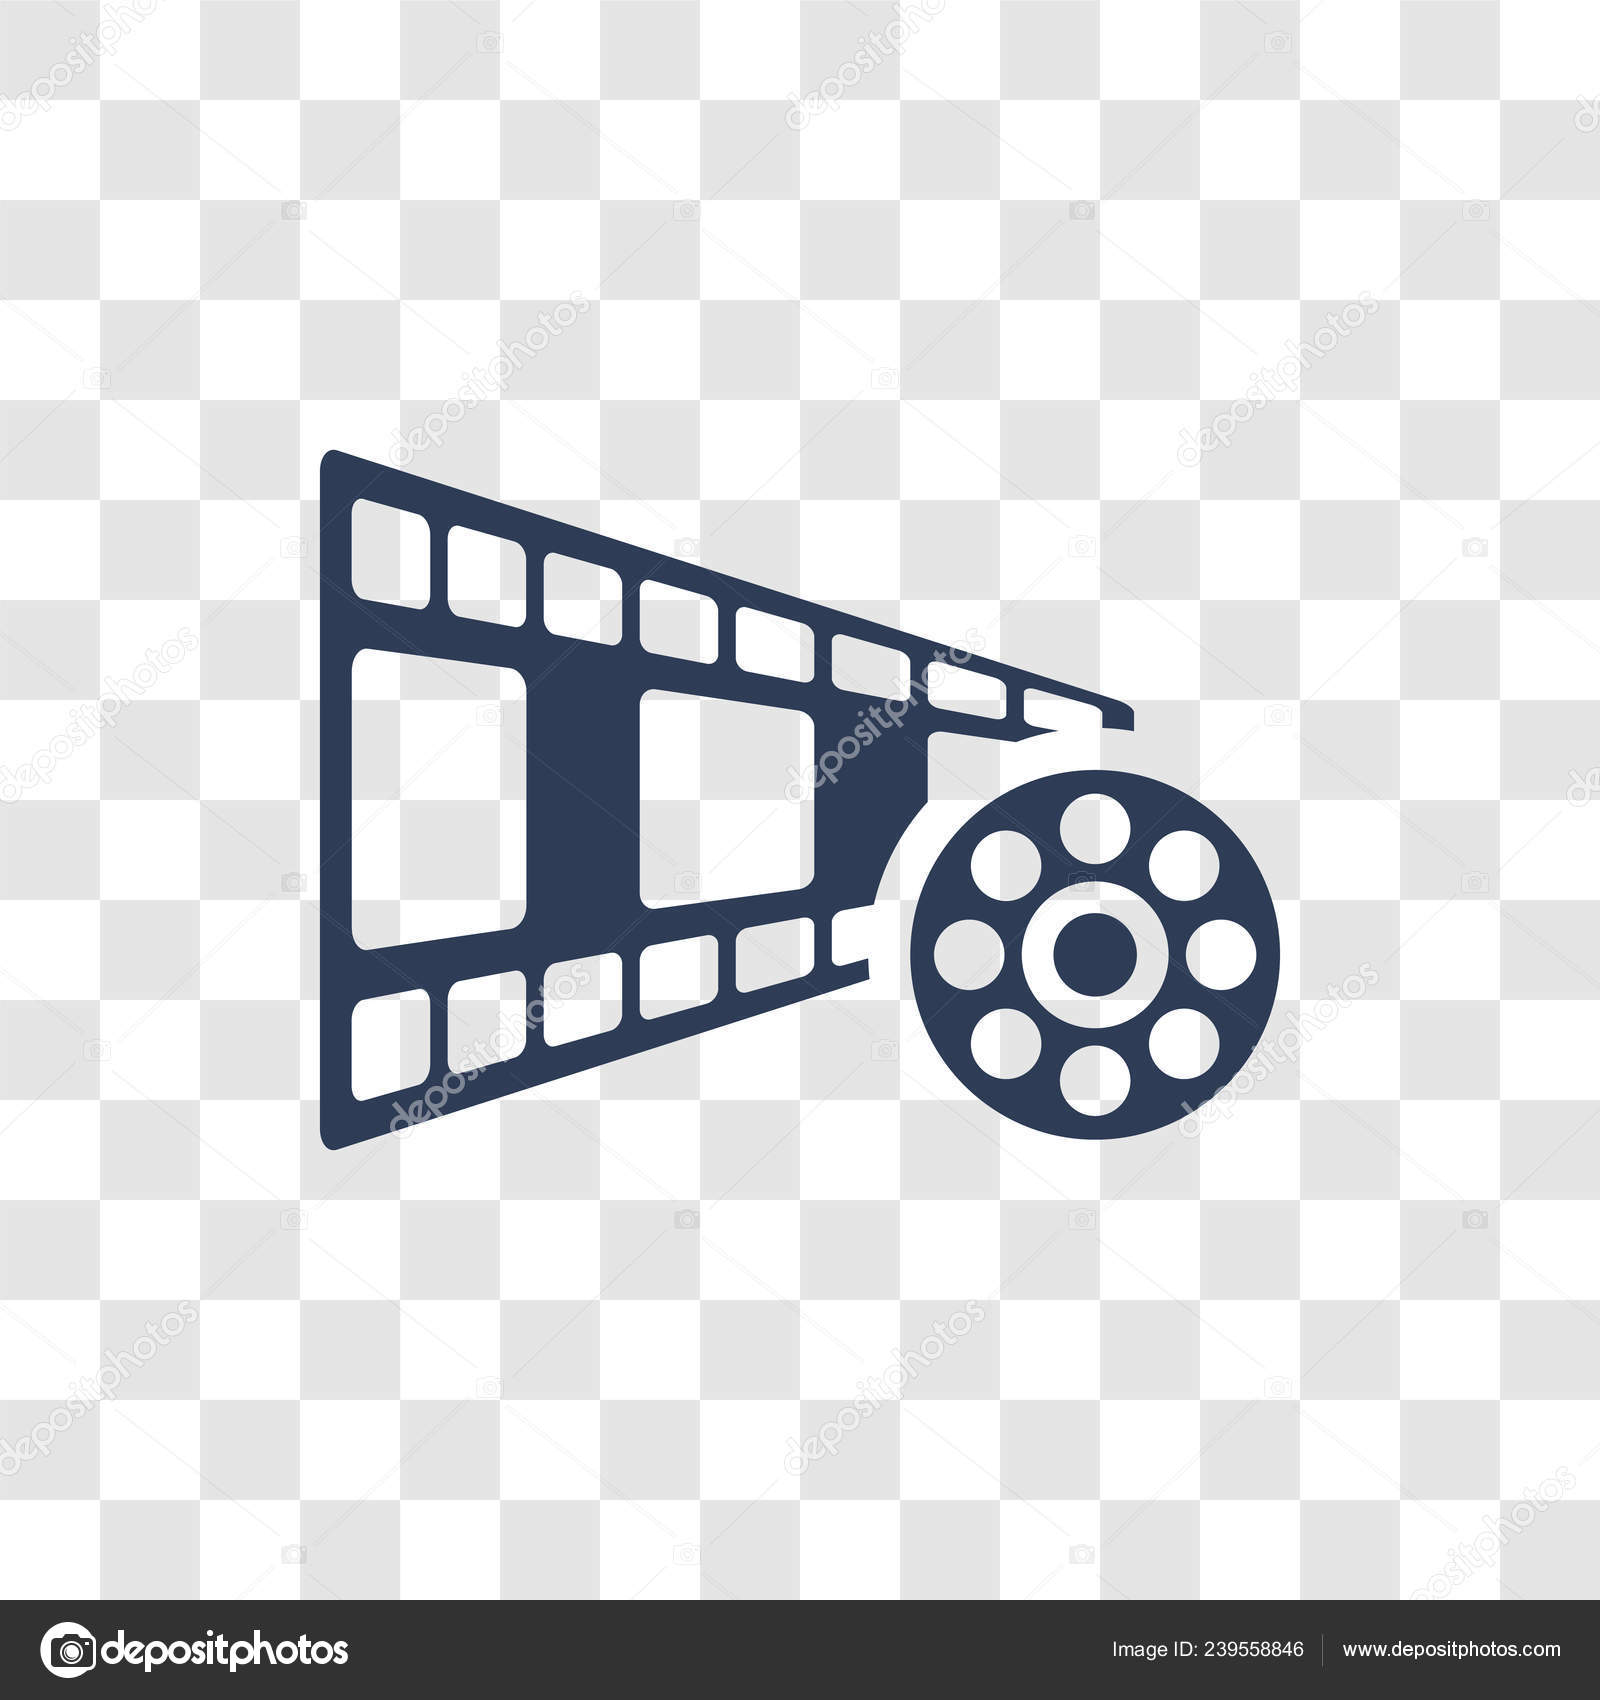 film reel icon trendy film reel logo concept transparent background stock vector c bestvectorstock 239558846